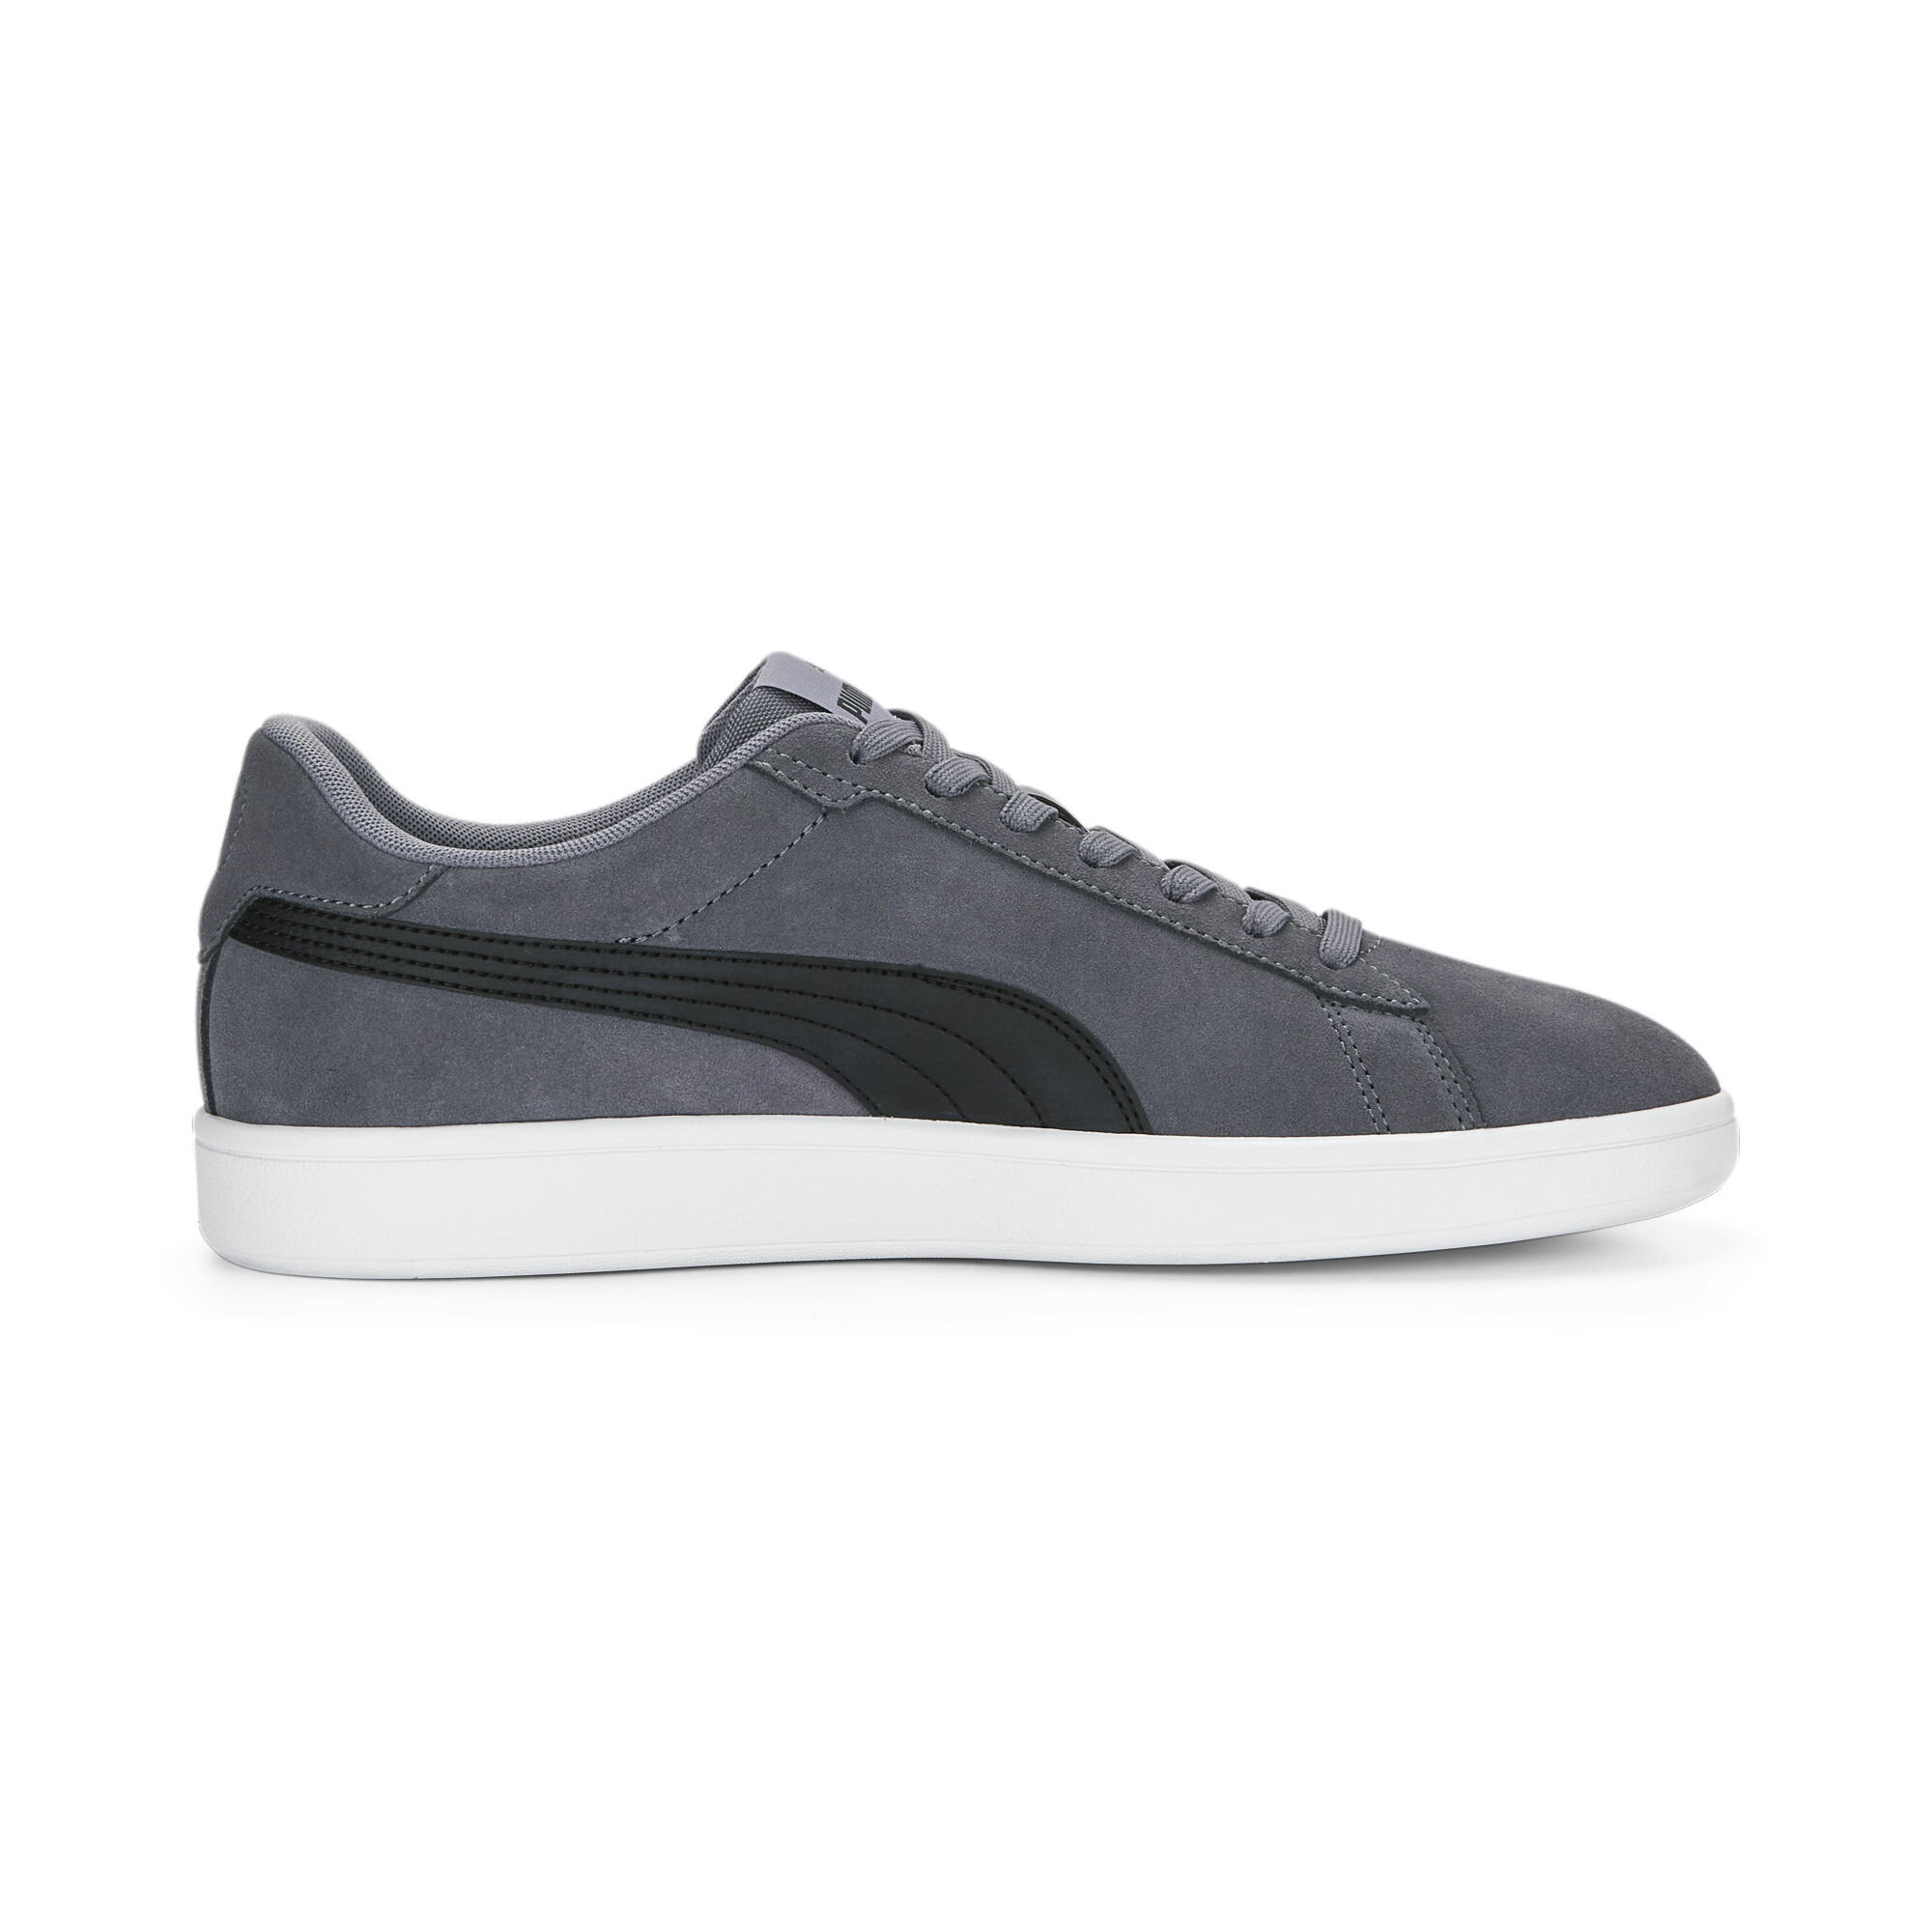 Puma Smash 3.0 Sneakers, Gray, Size 36, Shoes